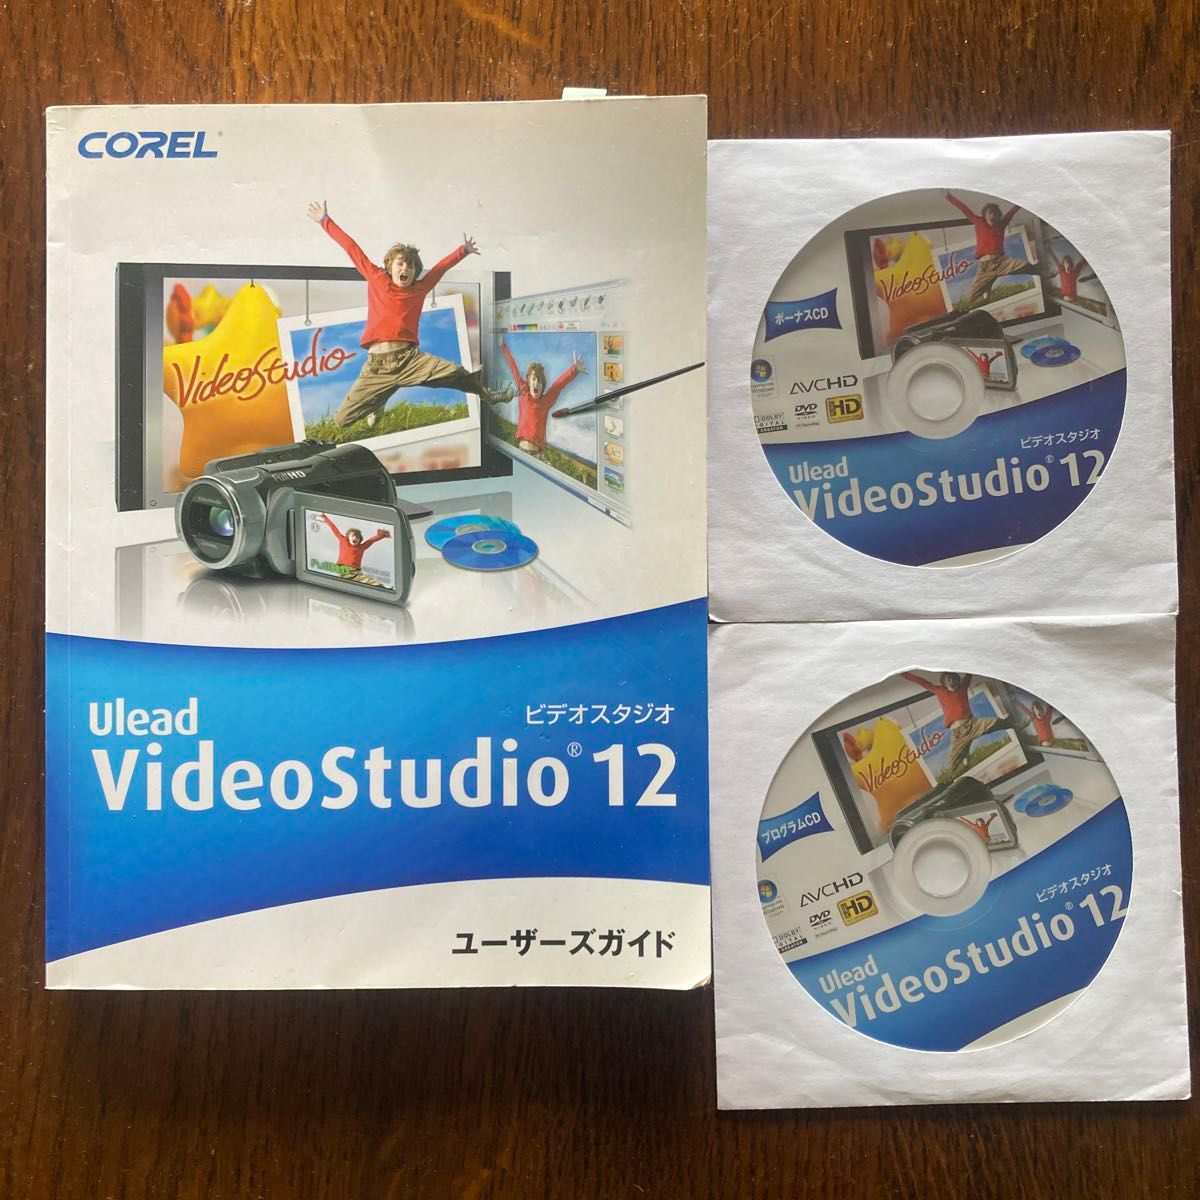 ★Corel VideoStudio 12 ガイドブック付★　国内シェアNo.1 ハイビジョン対応ビデオ編集ソフト